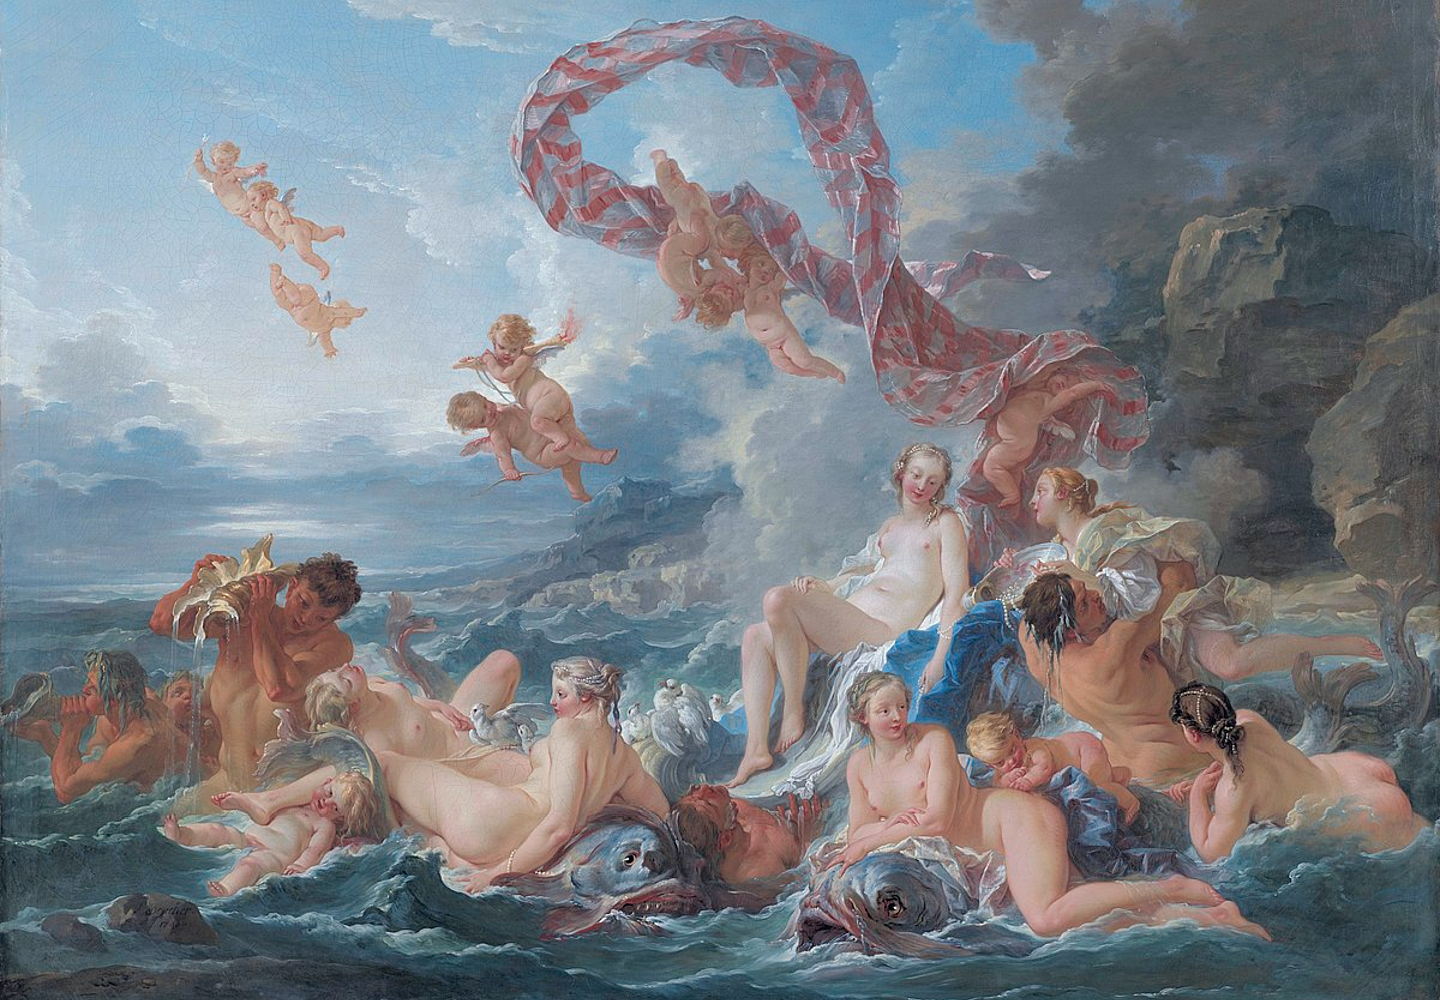 From Paris to Stockholm: Boucher’s Triumph of Venus